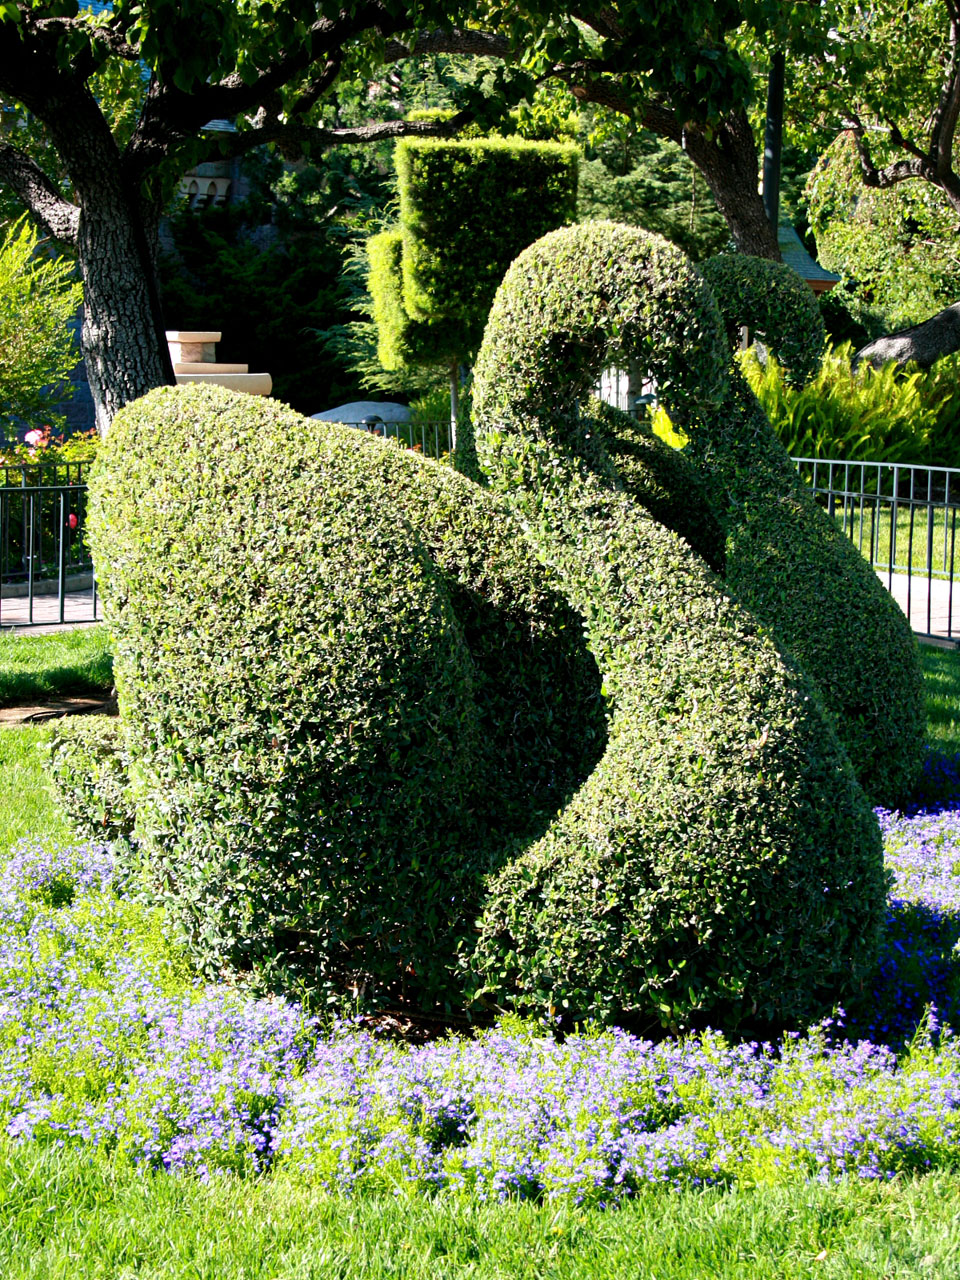 Topiary sculpture near Sleeping Beauty's Castle in Disneyland, Anaheim, CA